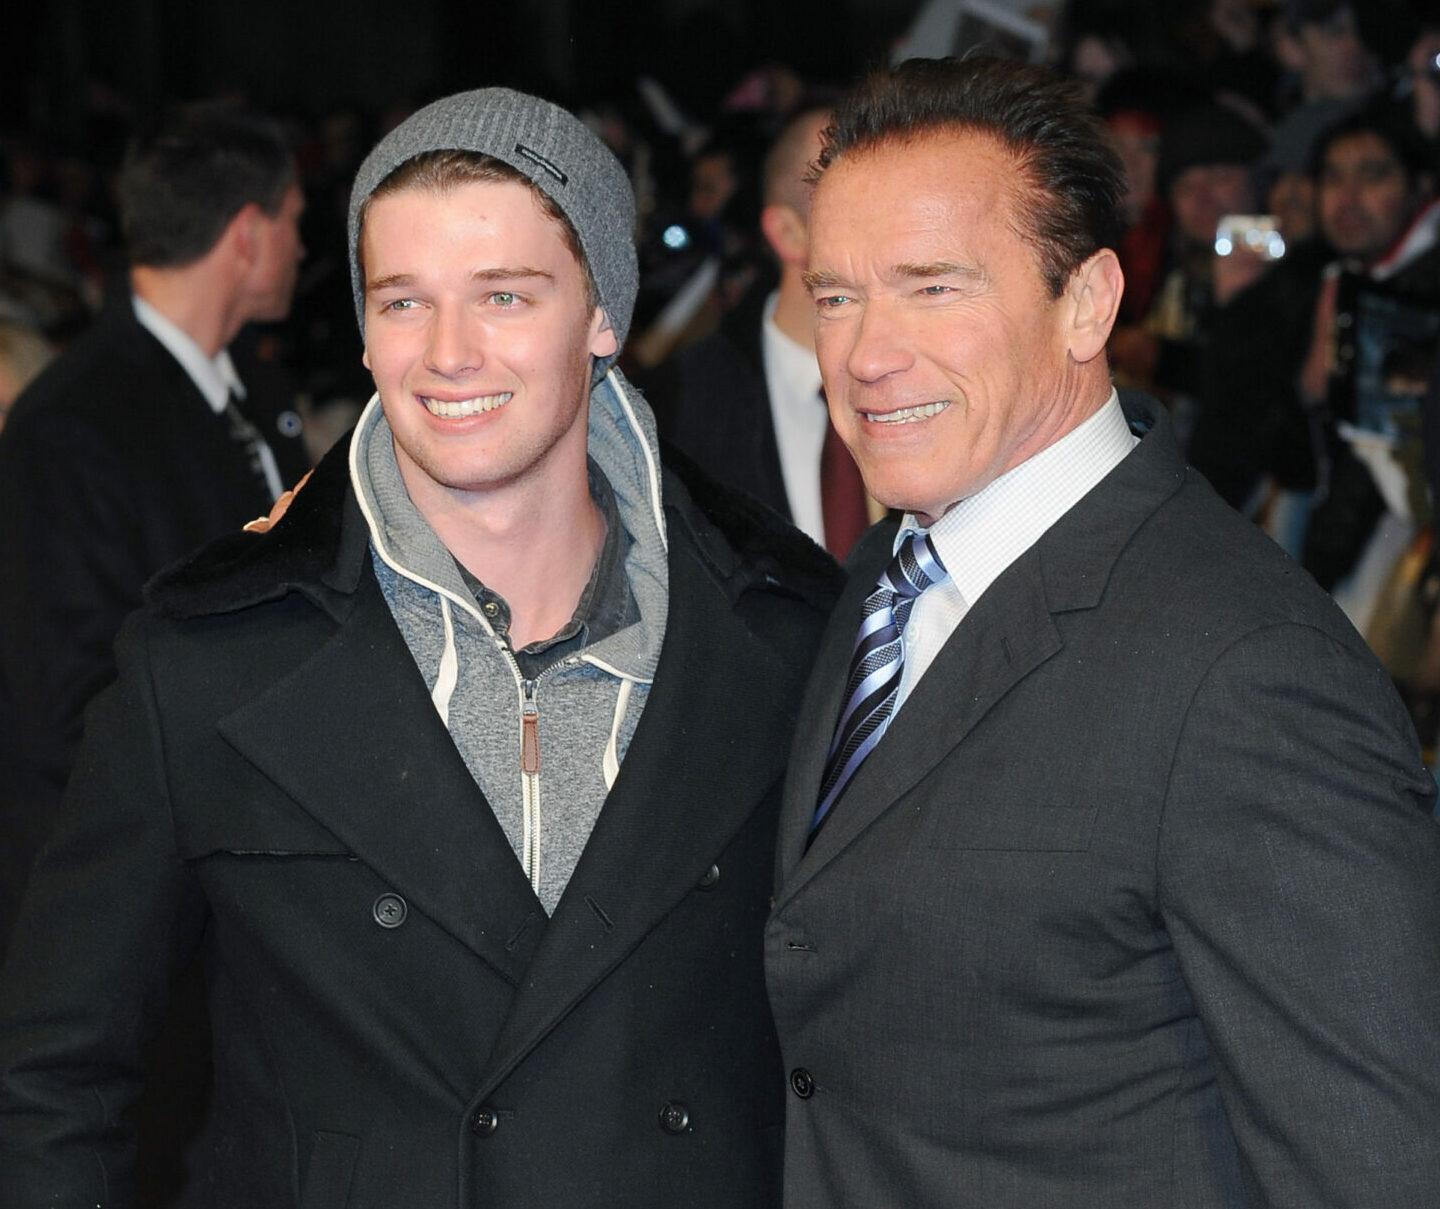 Arnold Schwarzenegger and his son Patrick Schwarzenegger attend the European Premiere of Last stand